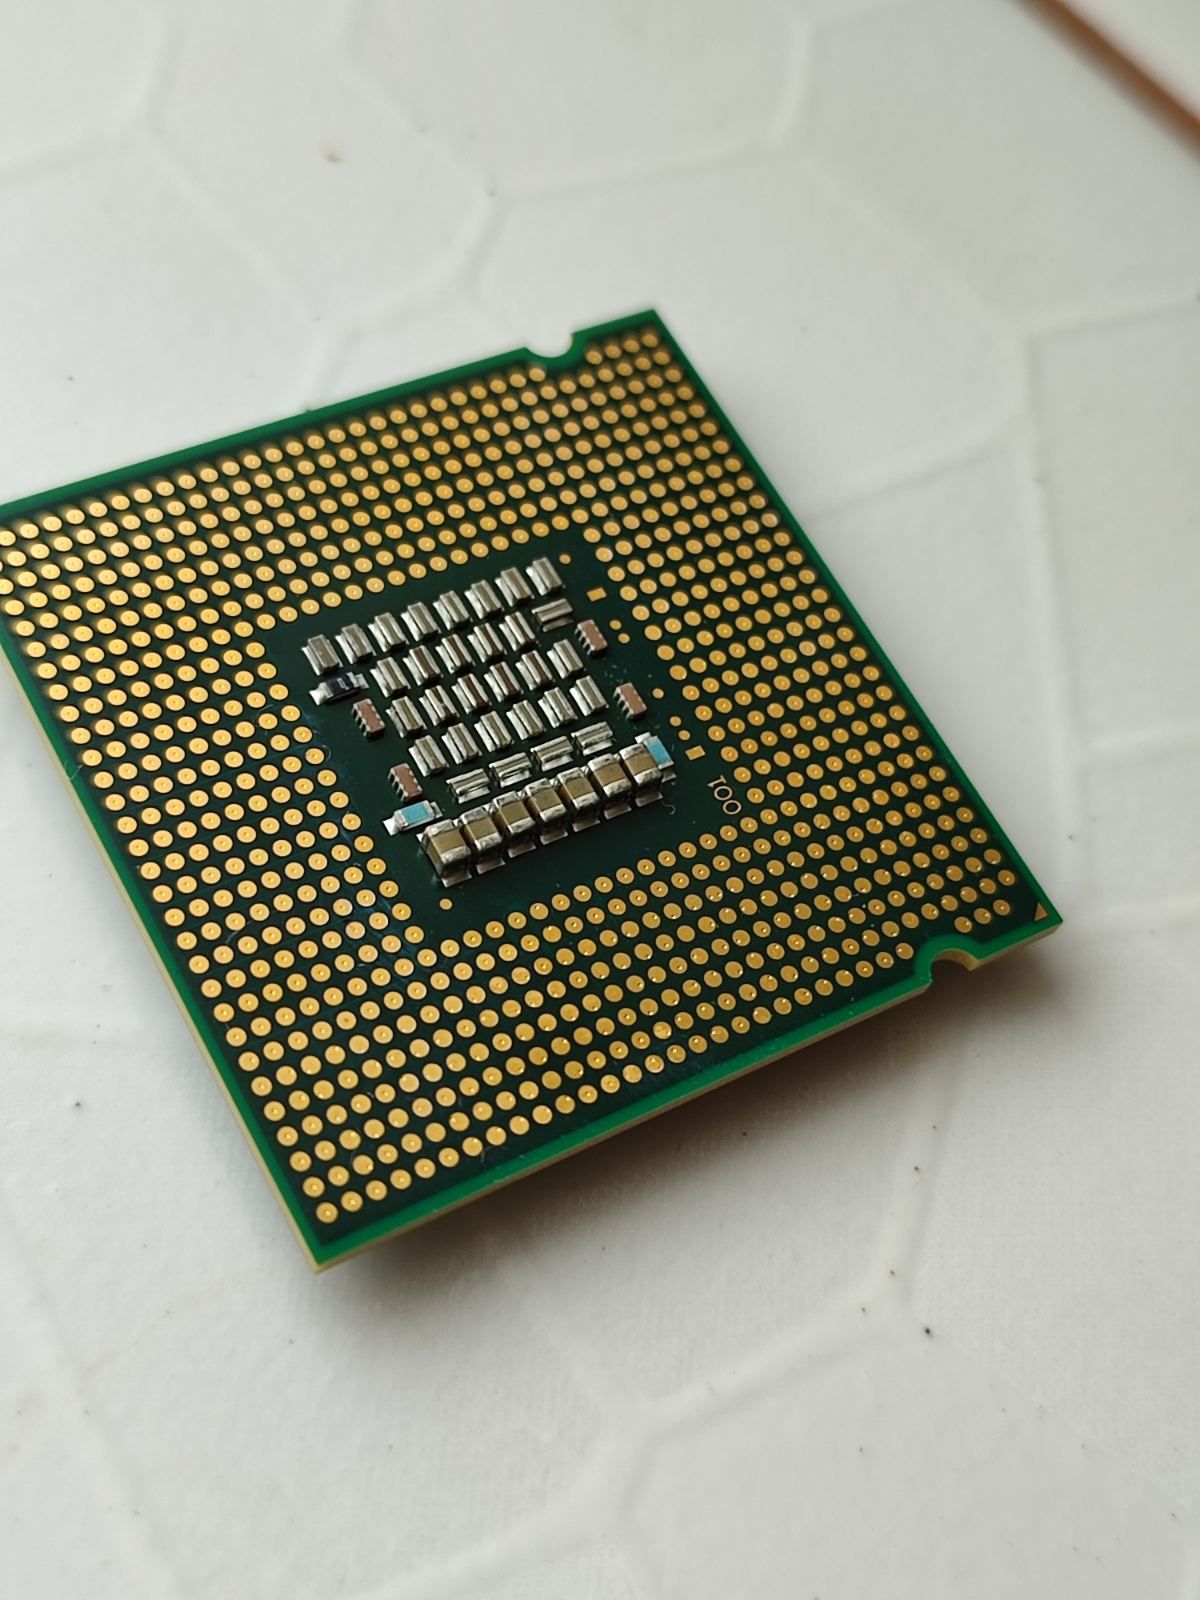 Процесор Intel core 2 duo